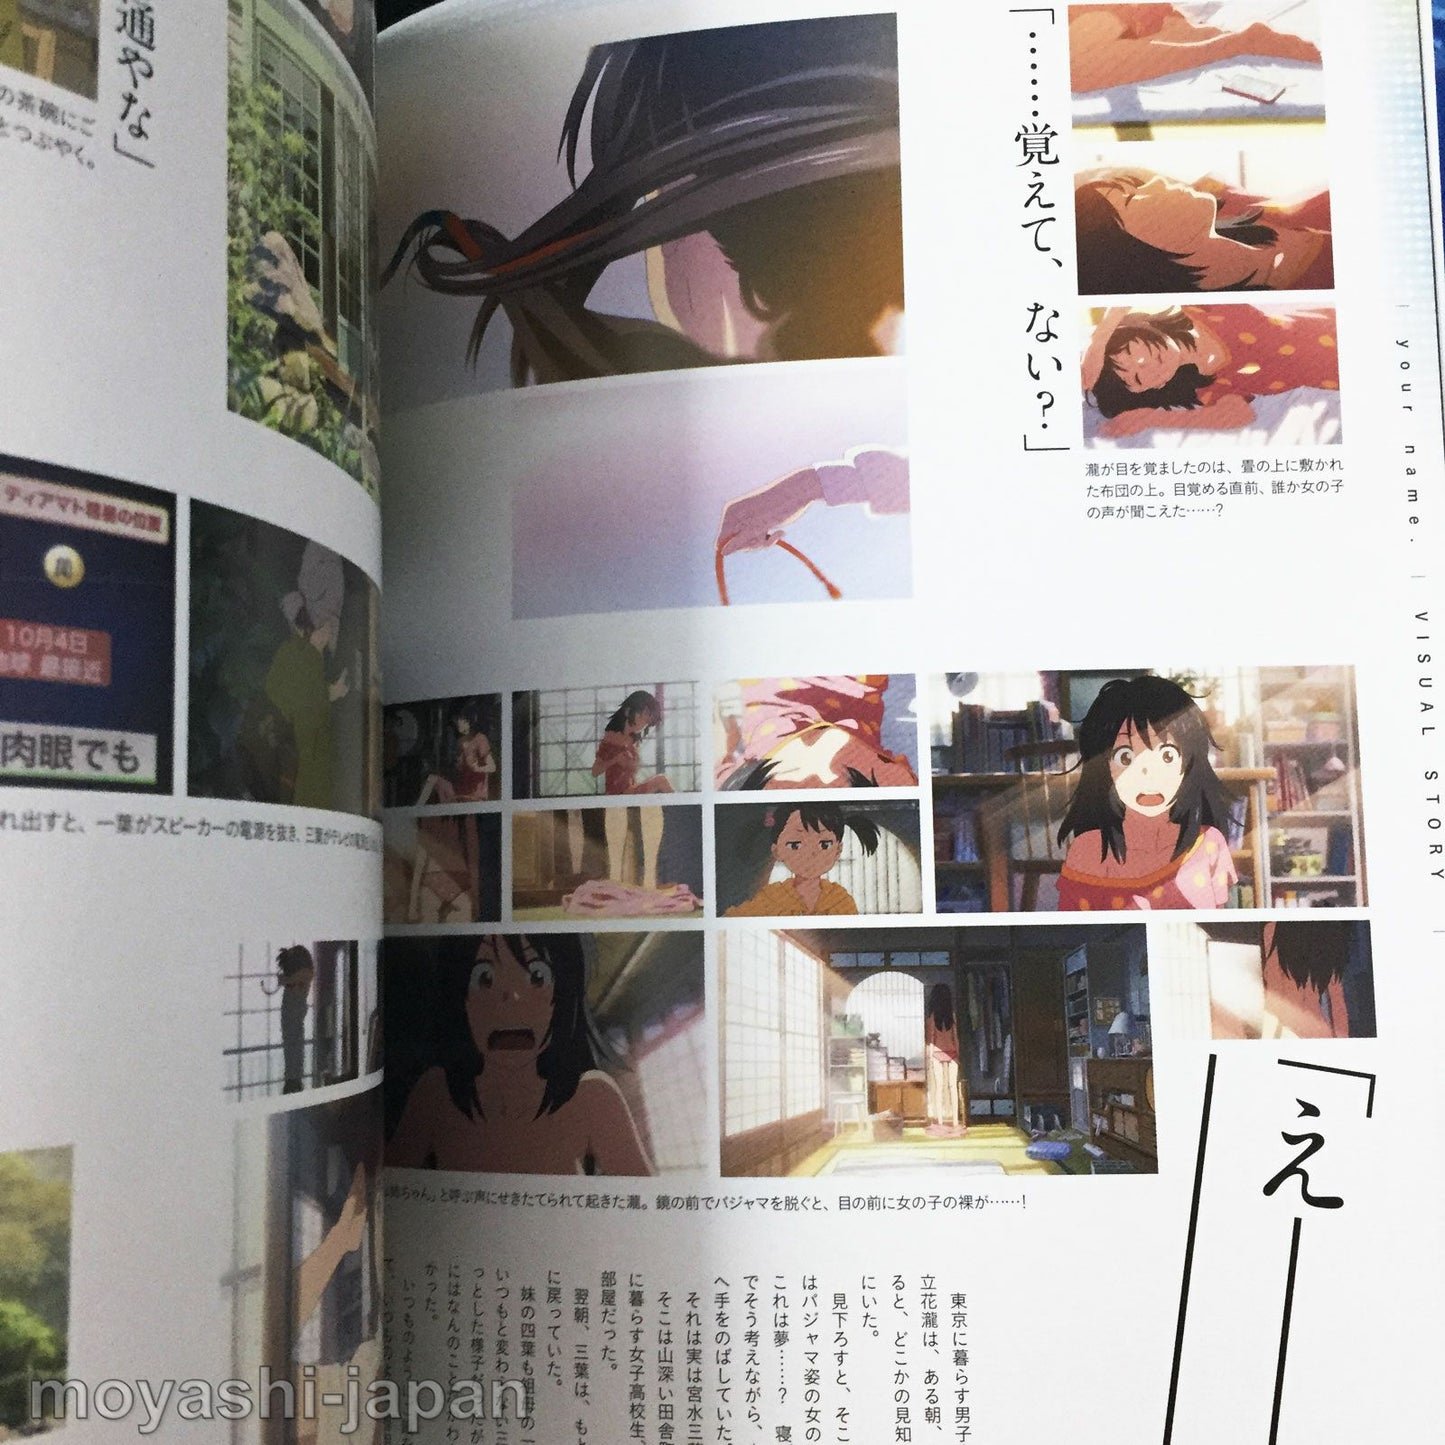 Kimi no Na wa (Your Name) Official Visual Guide